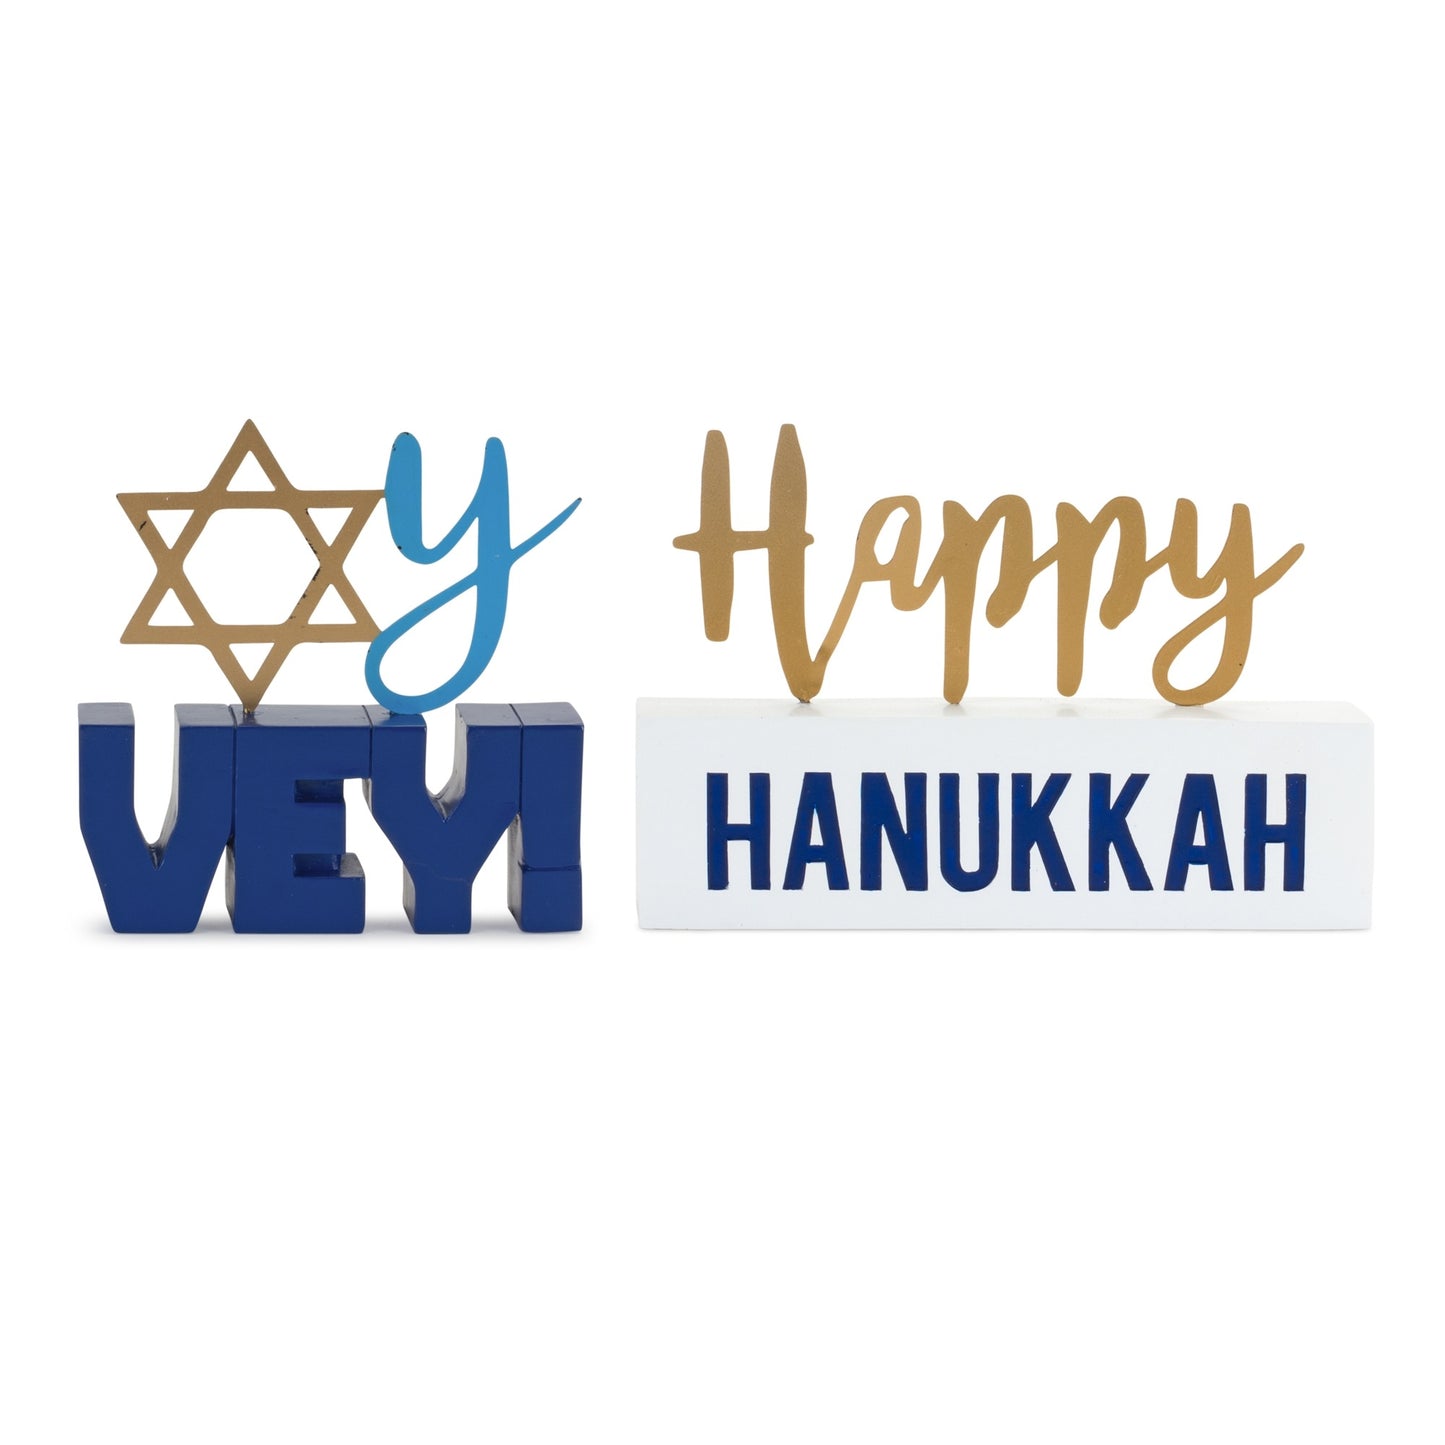 Hanukkah Holiday Tabletop Signs